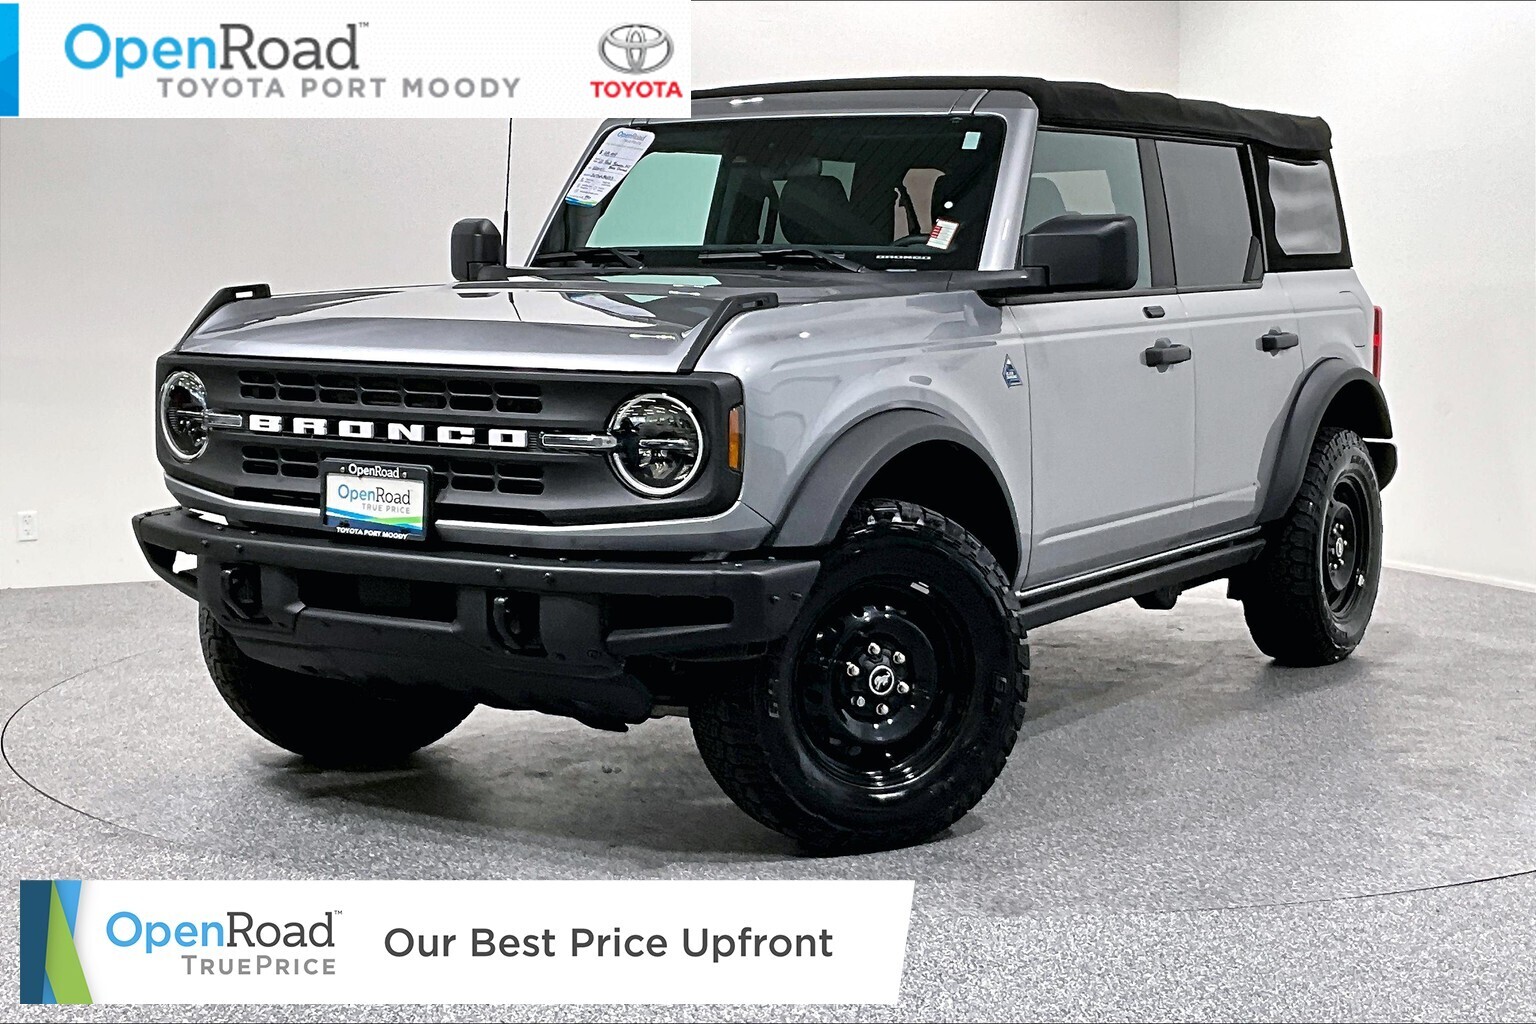 2021 Ford Bronco 4-Door Black Diamond |OpenRoad True Price |Local |